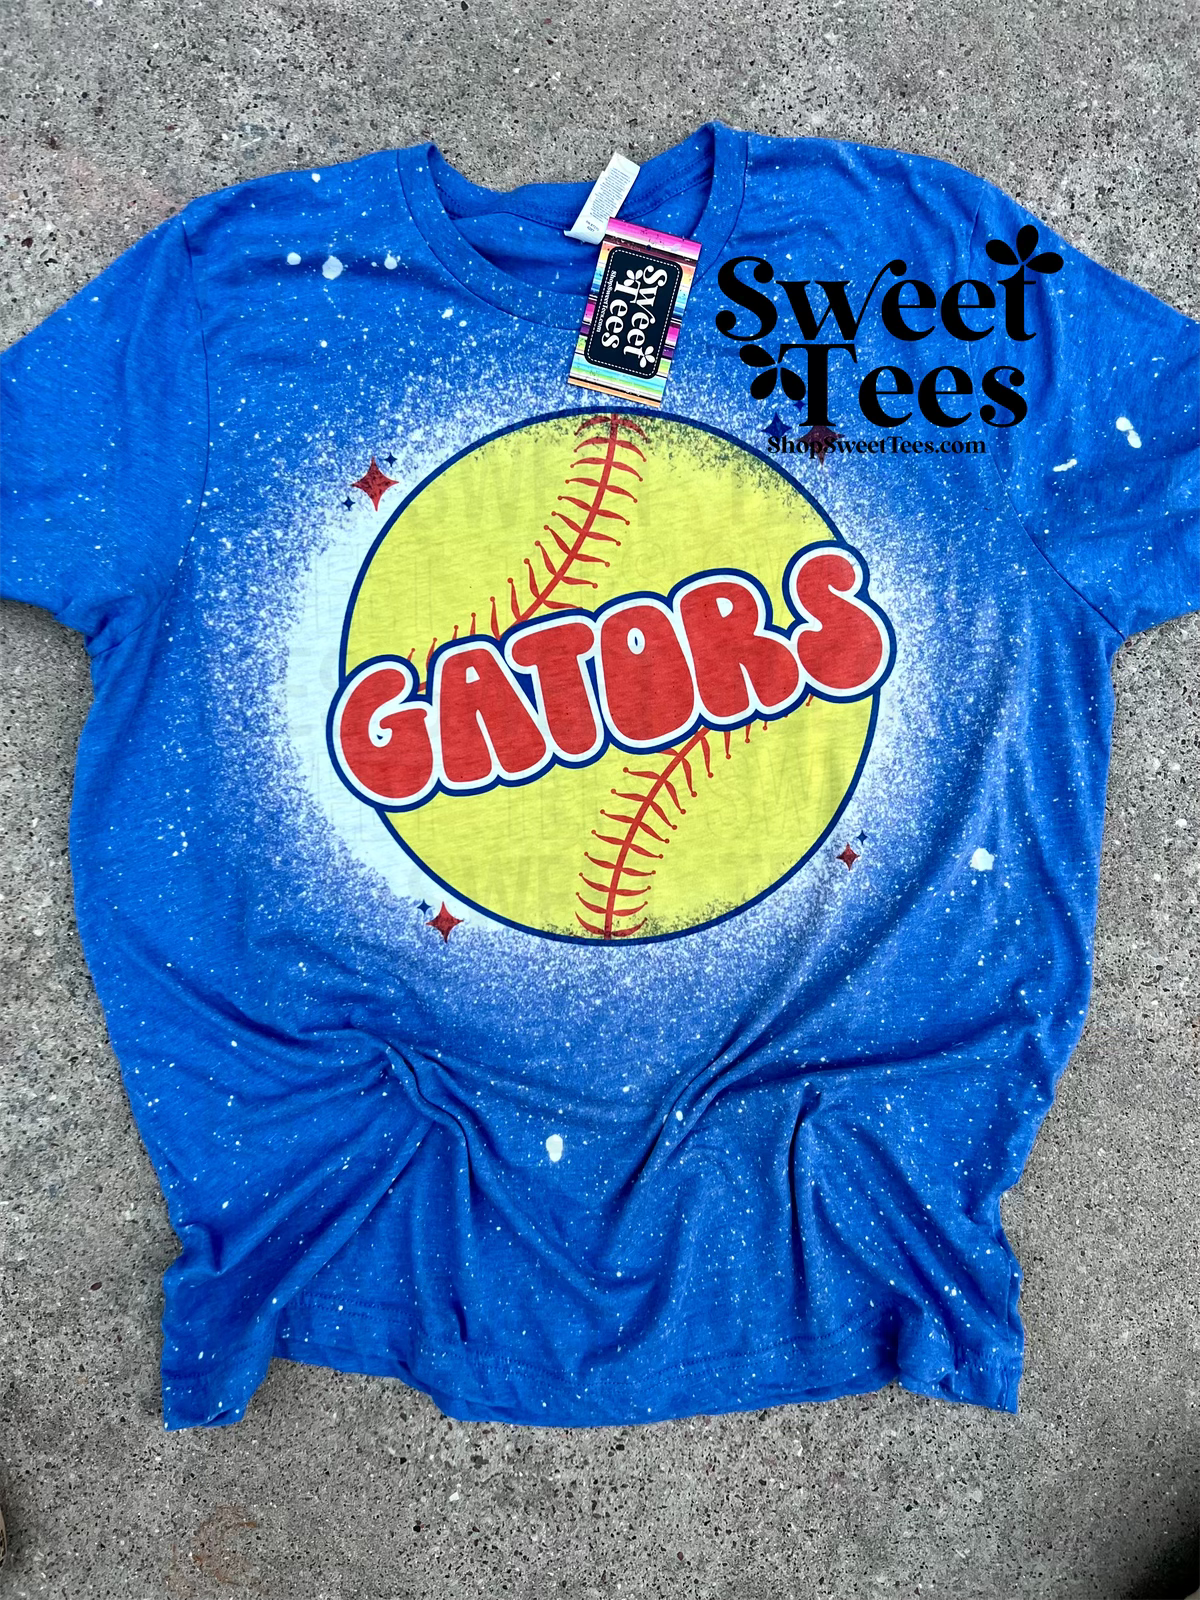 Gators Retro Softball tee